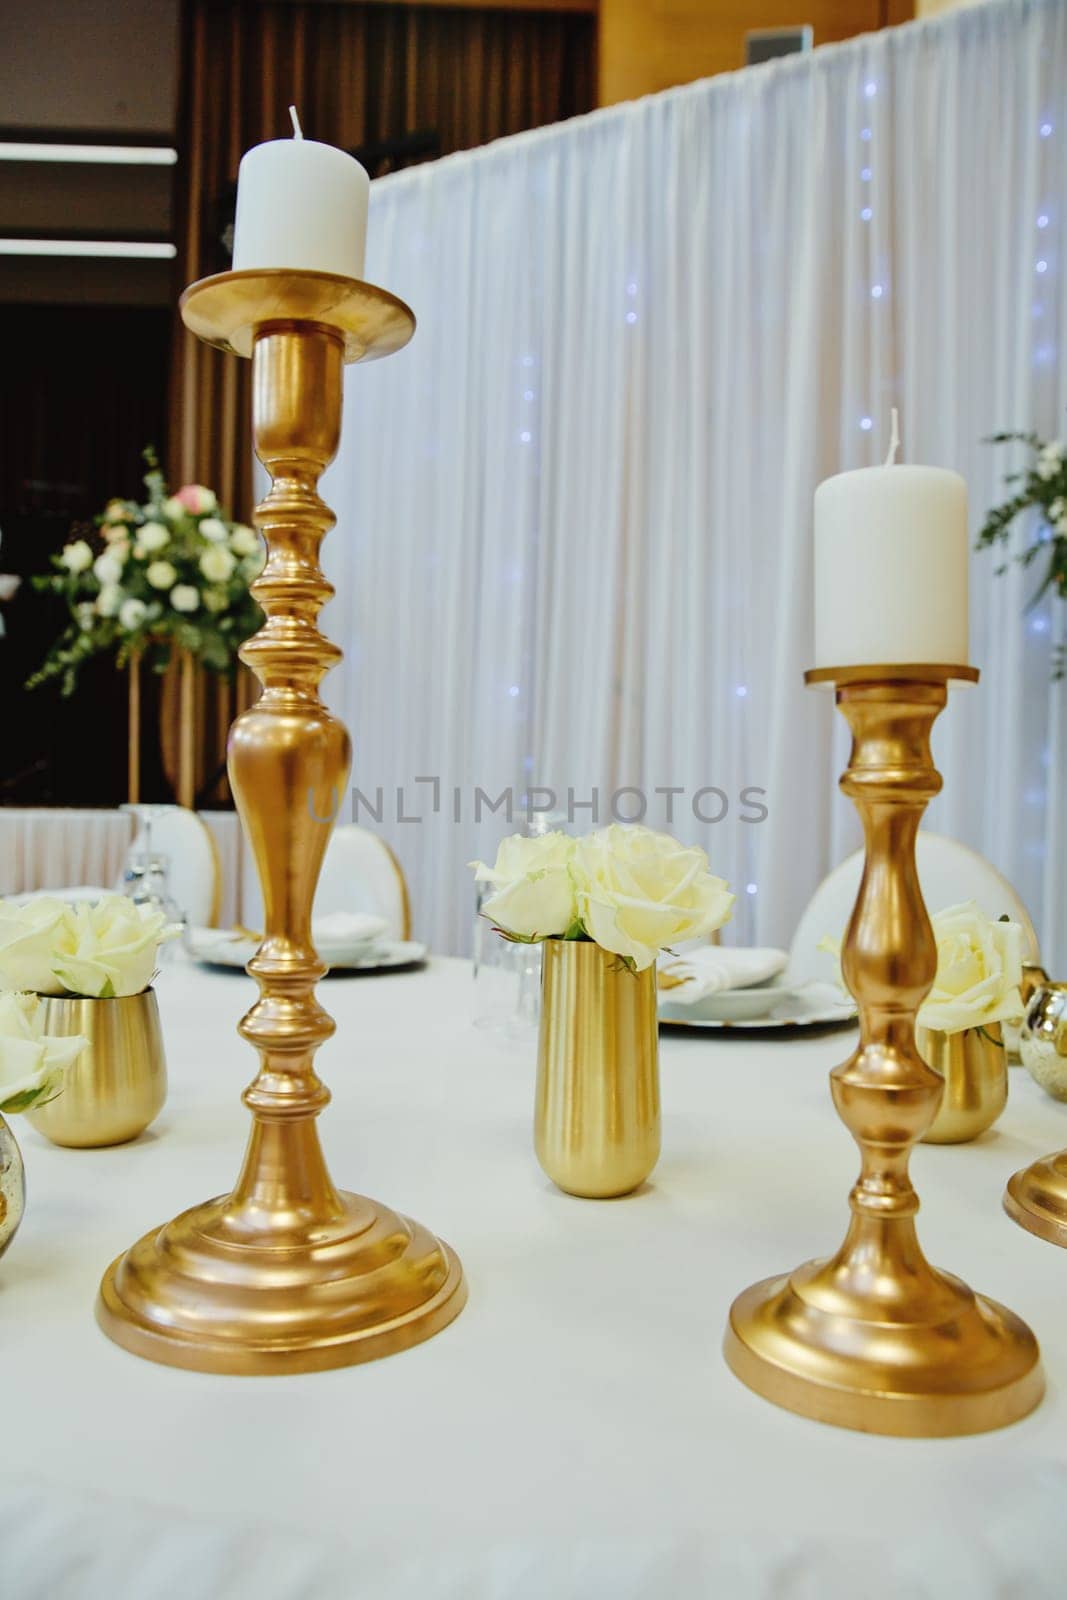 Gilded candlestick on a festive wedding table. Elegance wedding decor. by leonik